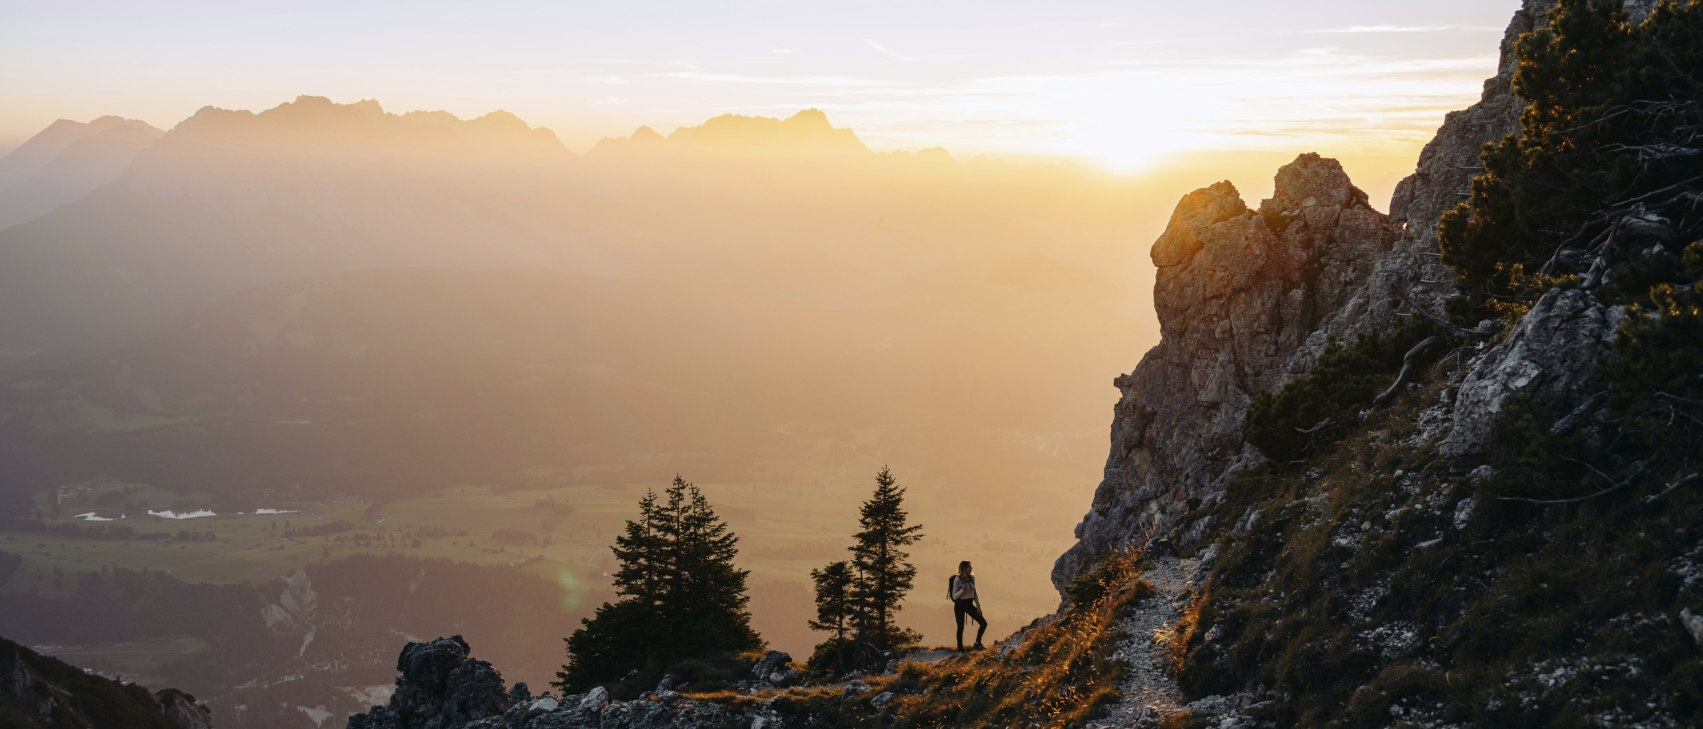 Wanderung zum Signalkopf bei Sonnenuntergang, © Alpenwelt Karwendel / André Alexander@formgestalter